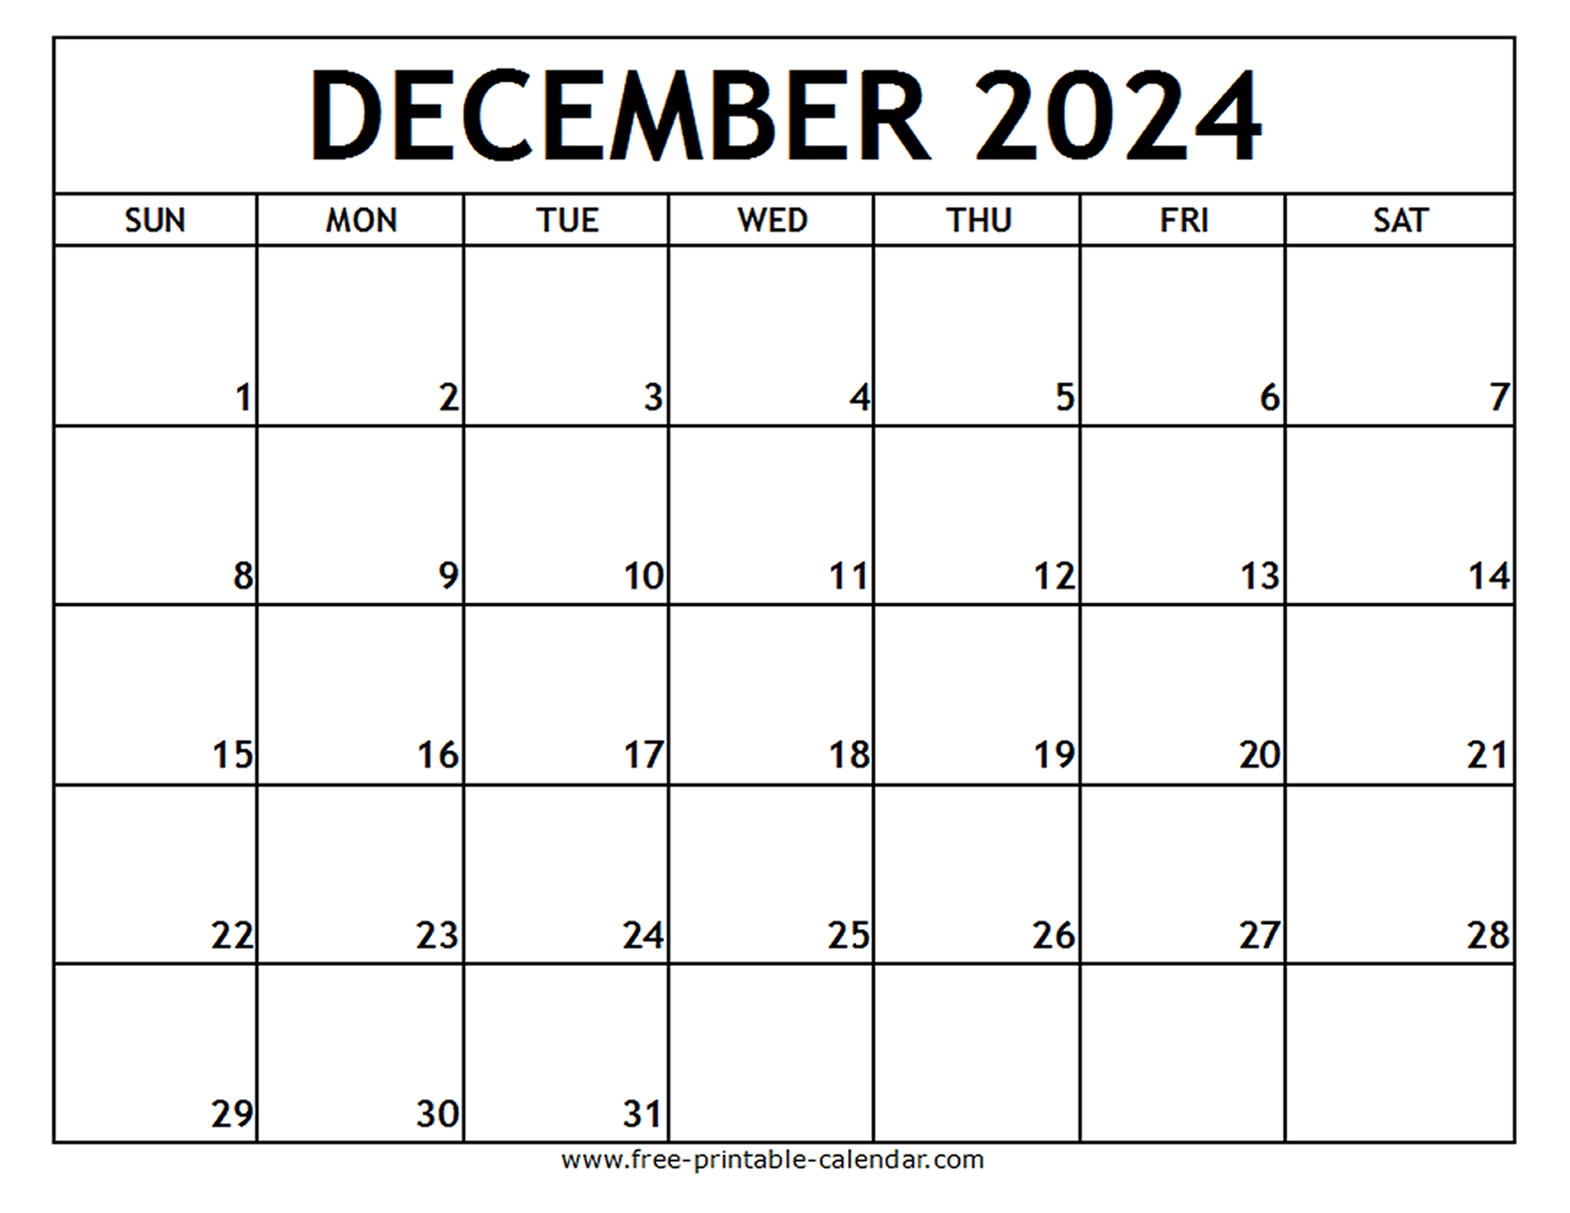 December 2024 Printable Calendar - Free-Printable-Calendar inside Free Printable Calendar 2024 Dec